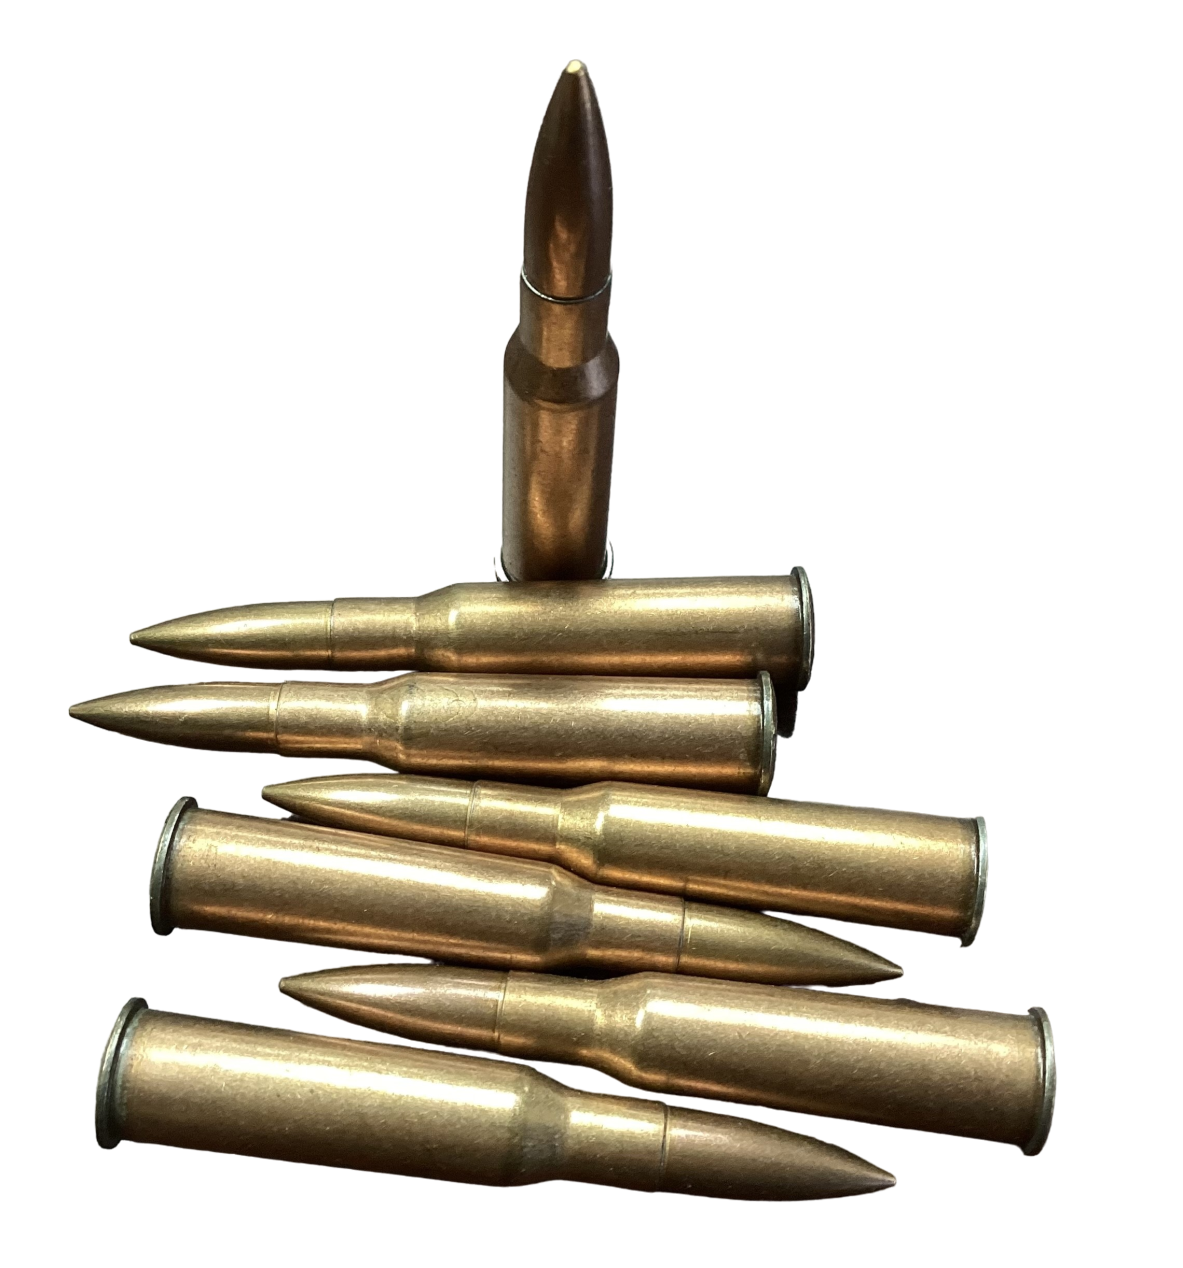 HSM Ammo 270WSM 130SP 20 Bullets - No Powder or Casing